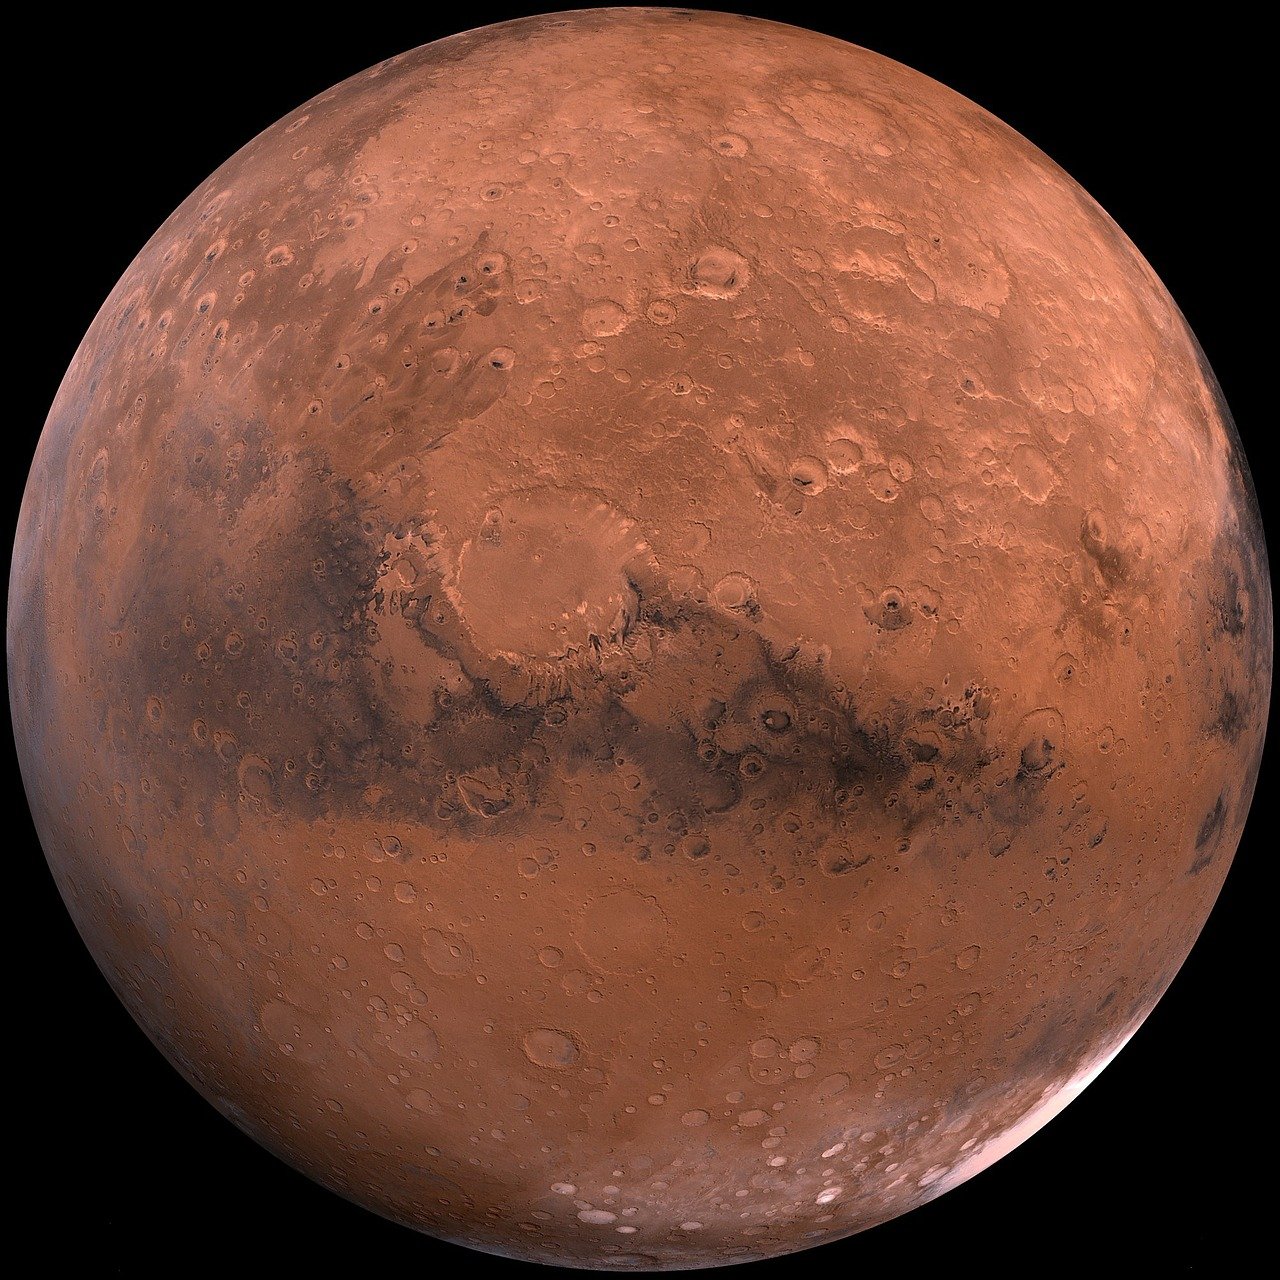 Nasa release Mars Landing Video